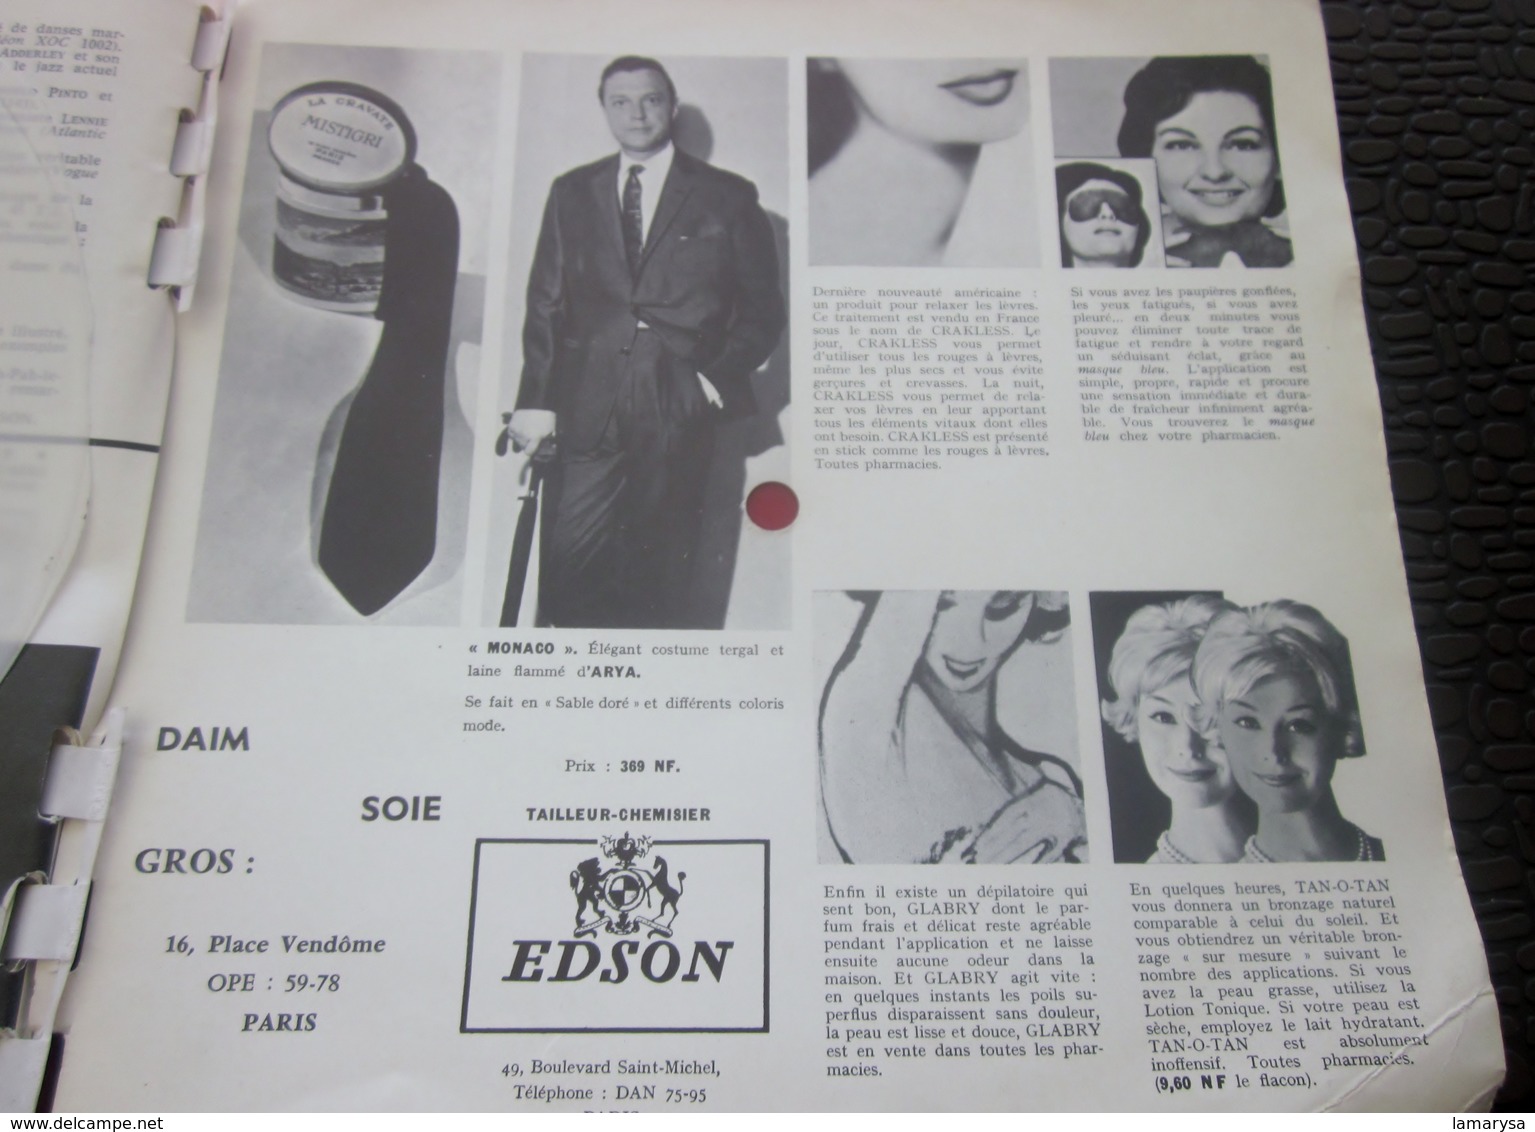 Magazine Sonorama N° 32-Août 1961-Musique Disque Vinyle Format spécial Algerie-De gaulle-Ursula Andress-Ray Charles-Pubs